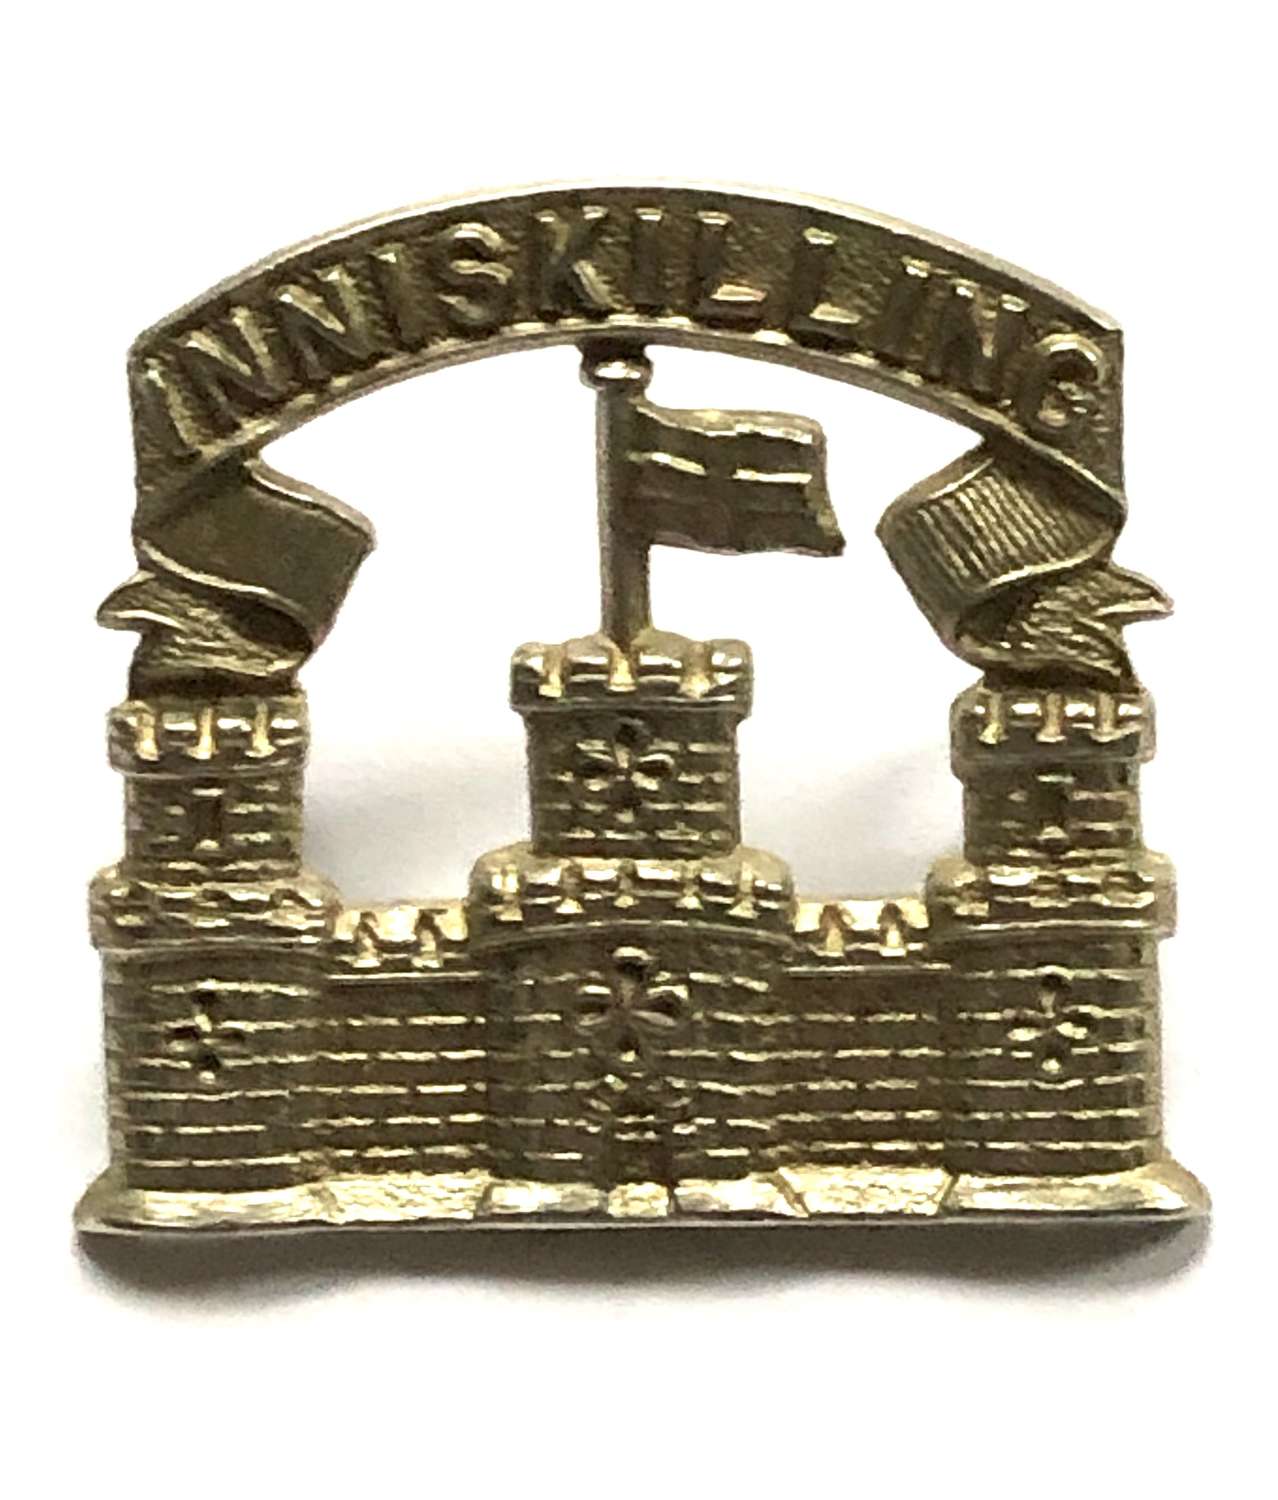 Royal Inniskilling Fusiliers cap badge circa 1926-34